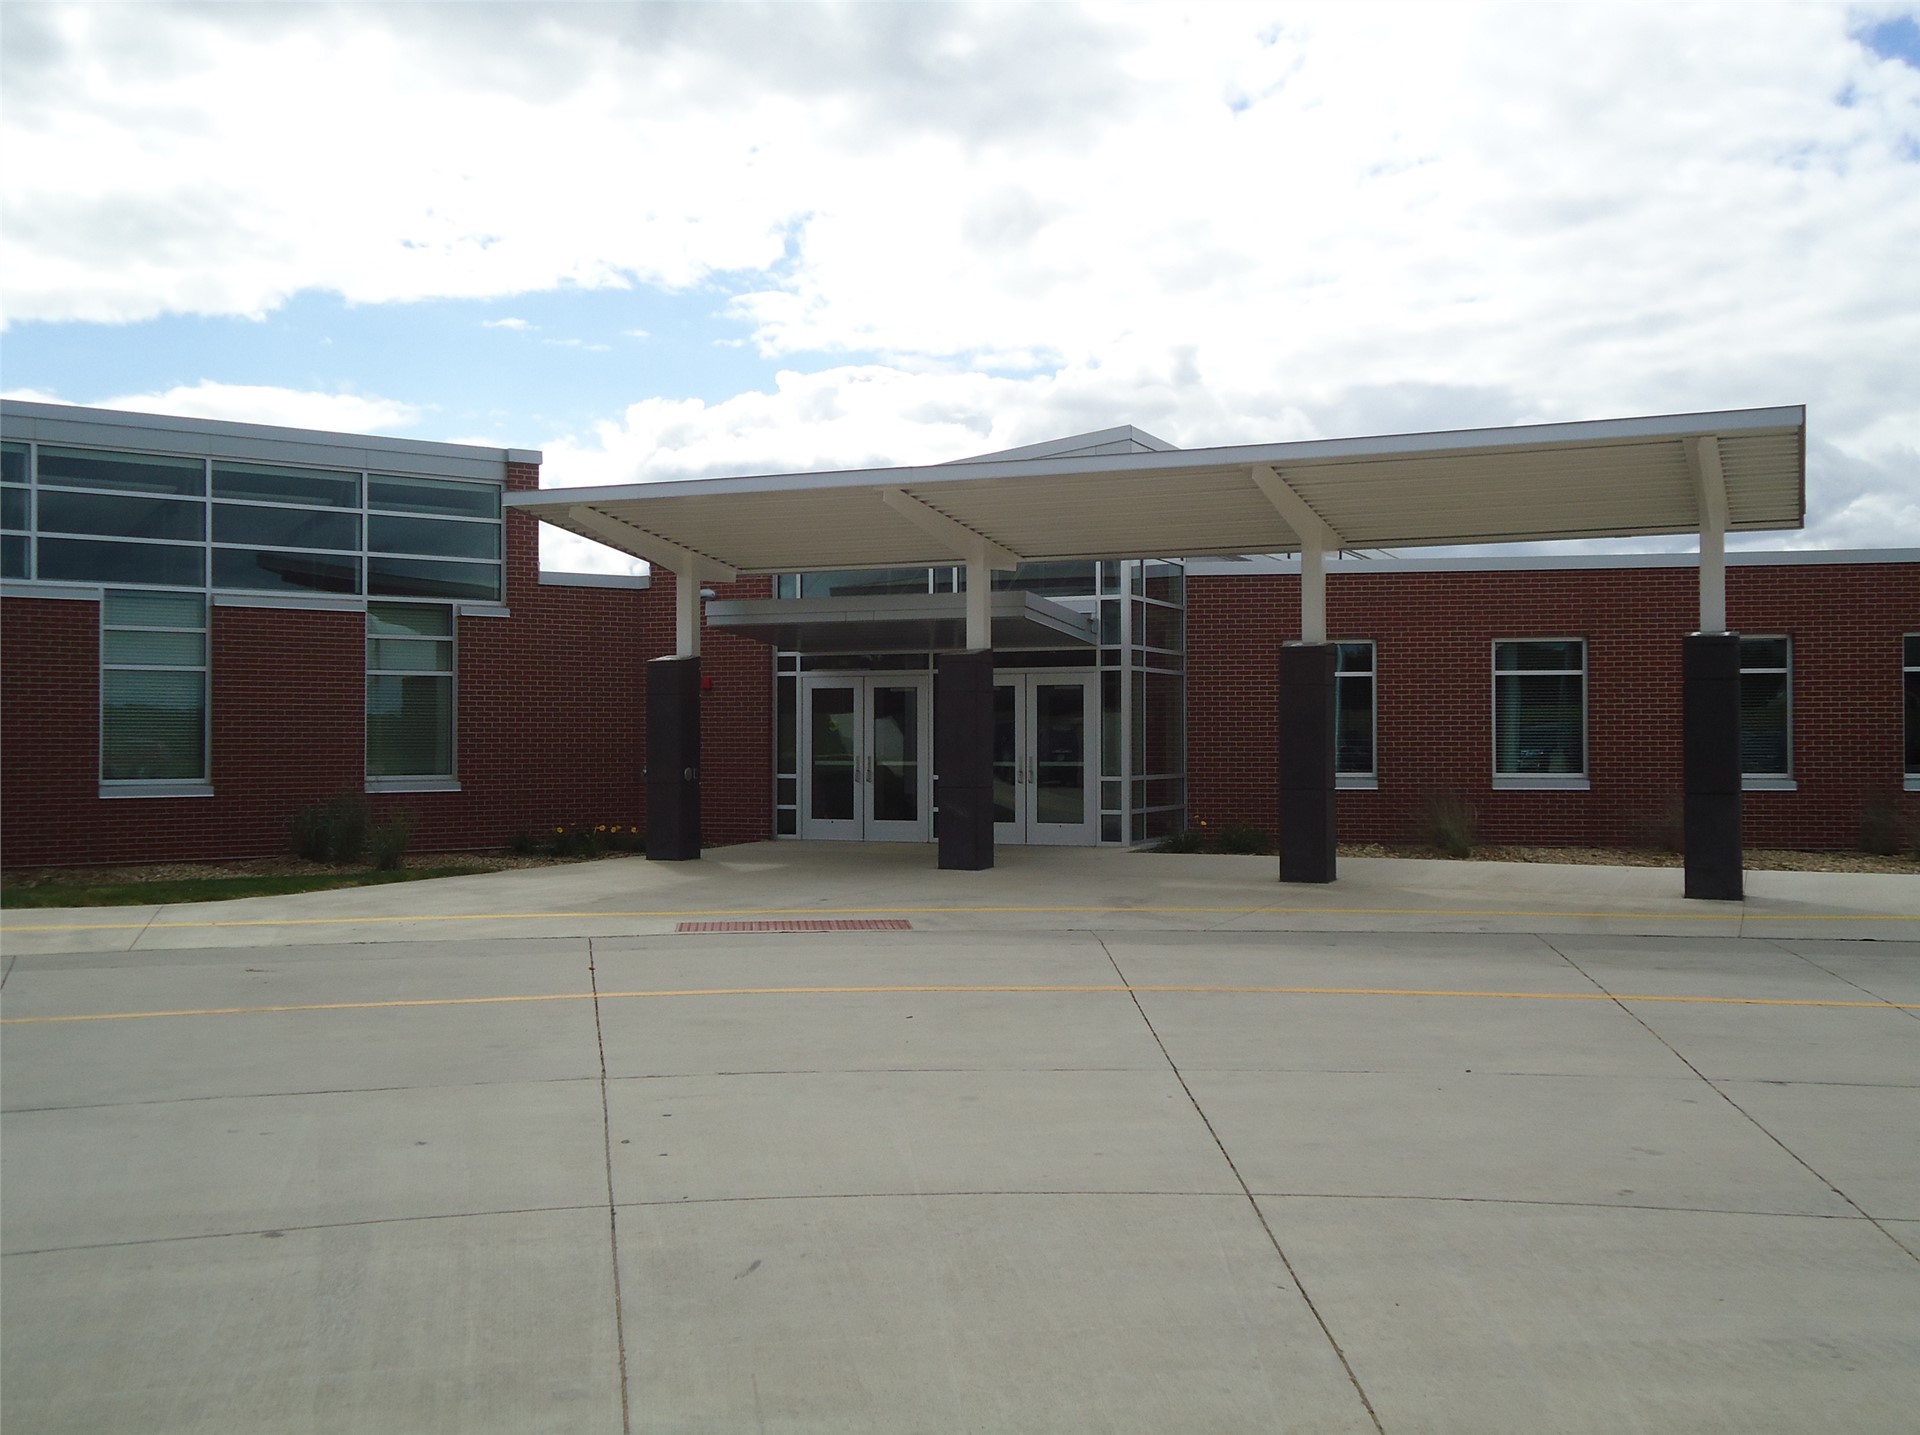 Dyersville Elementary School building